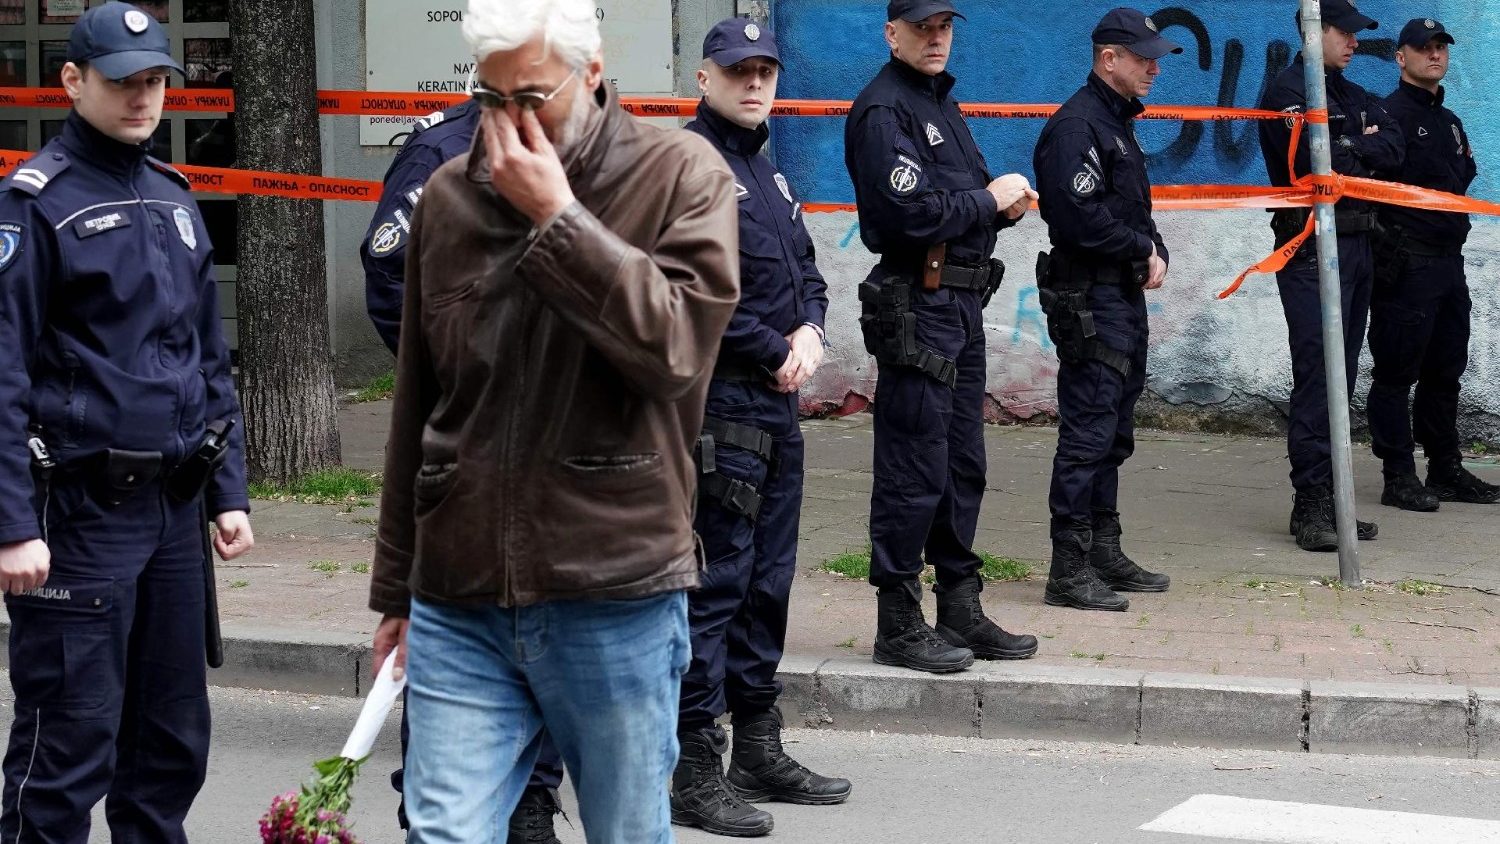 Serbia school shooting: 13-year-old shooter kills 9, police say